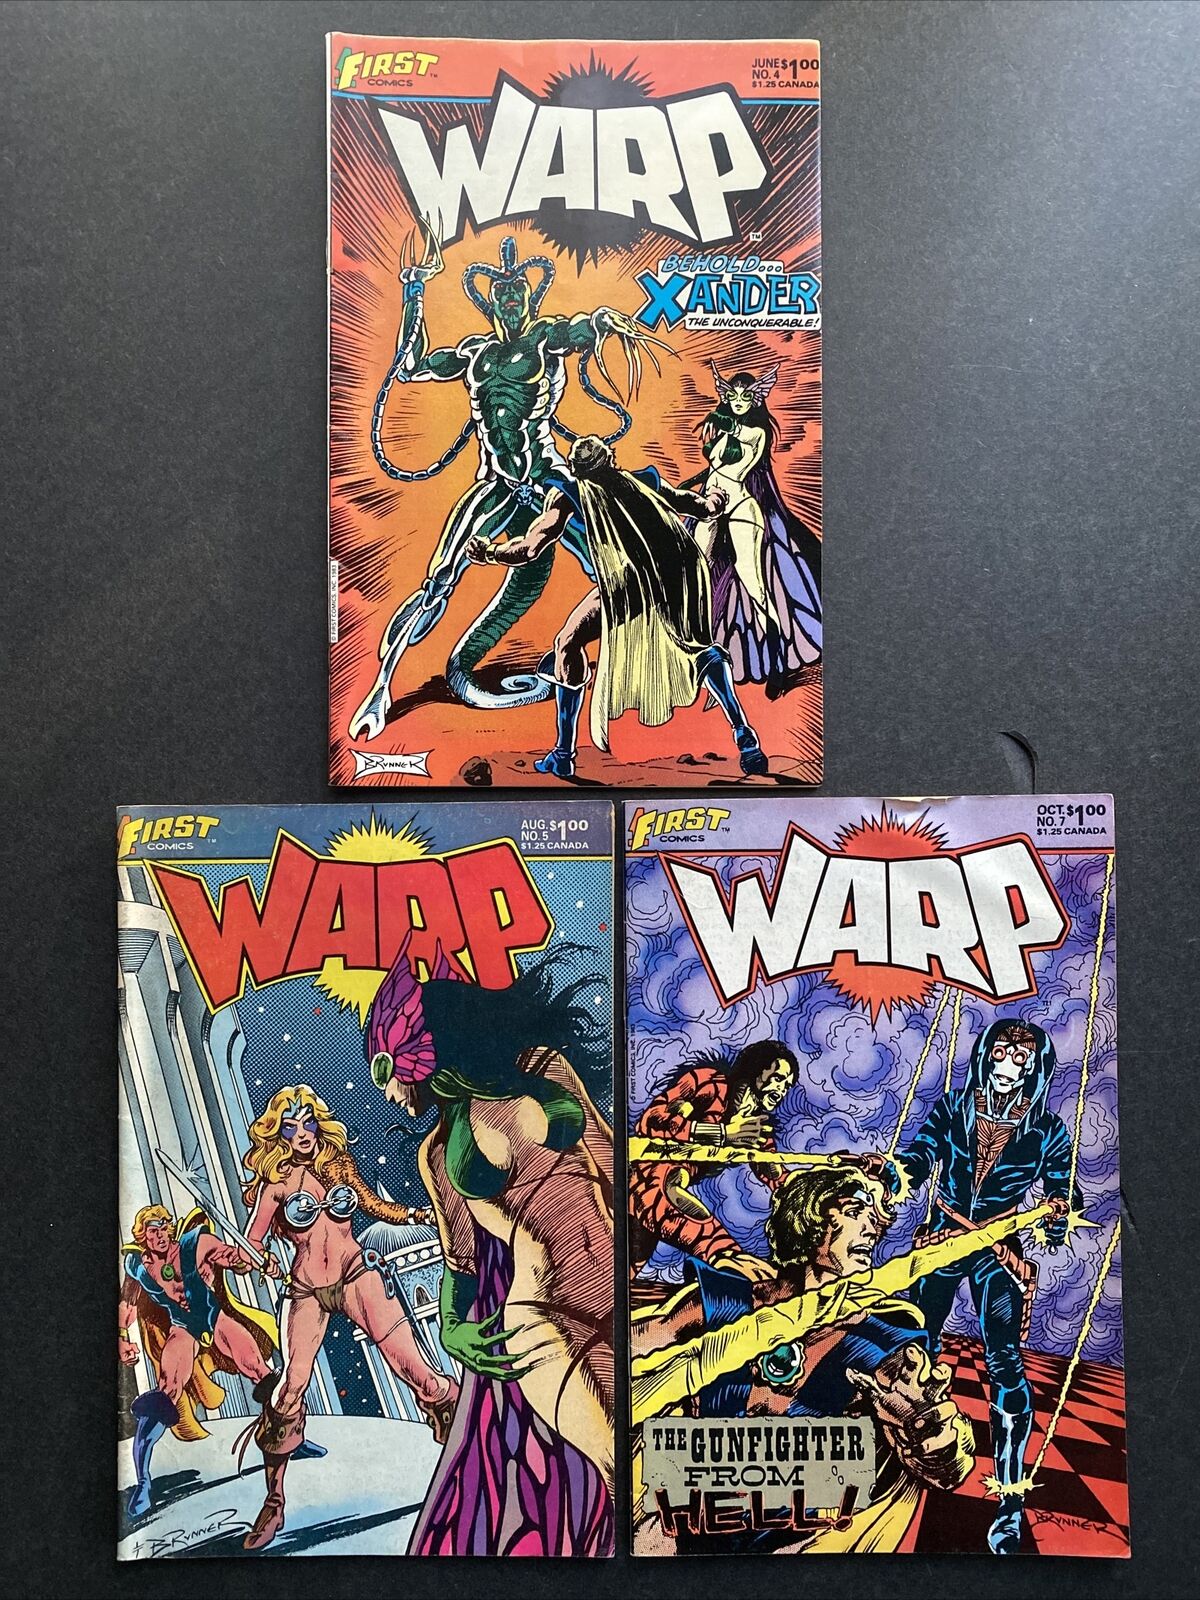 Warp #4 #5 #7 by First Comics